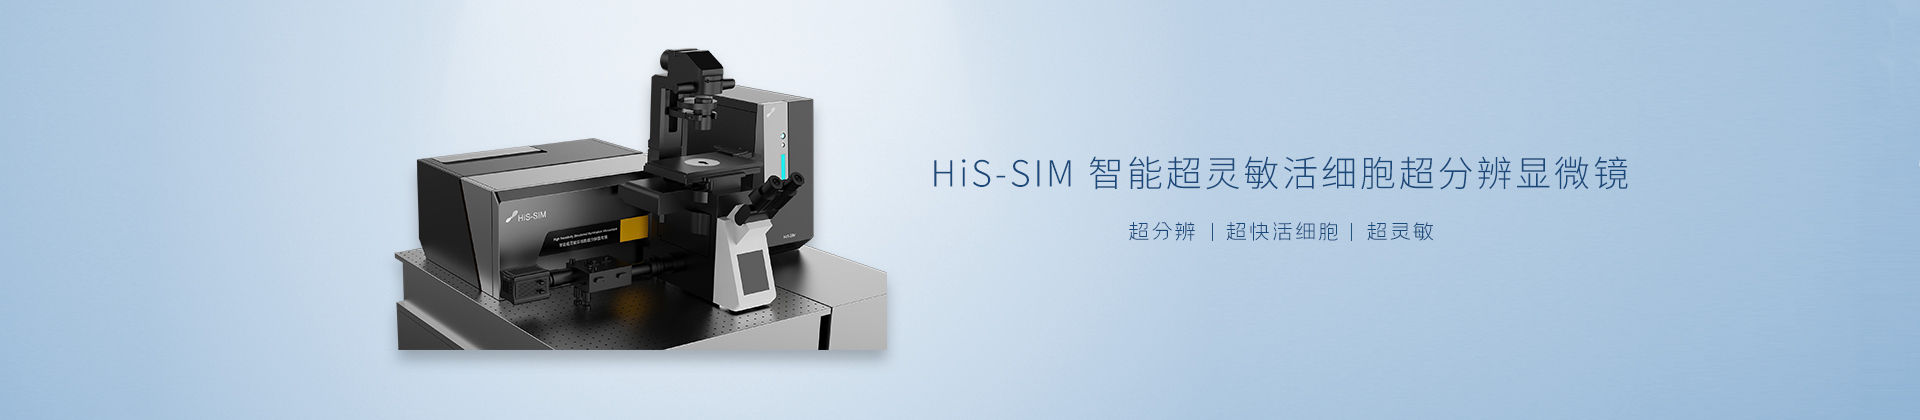 HiS-SIM智能超灵敏活细胞超分辨显微镜